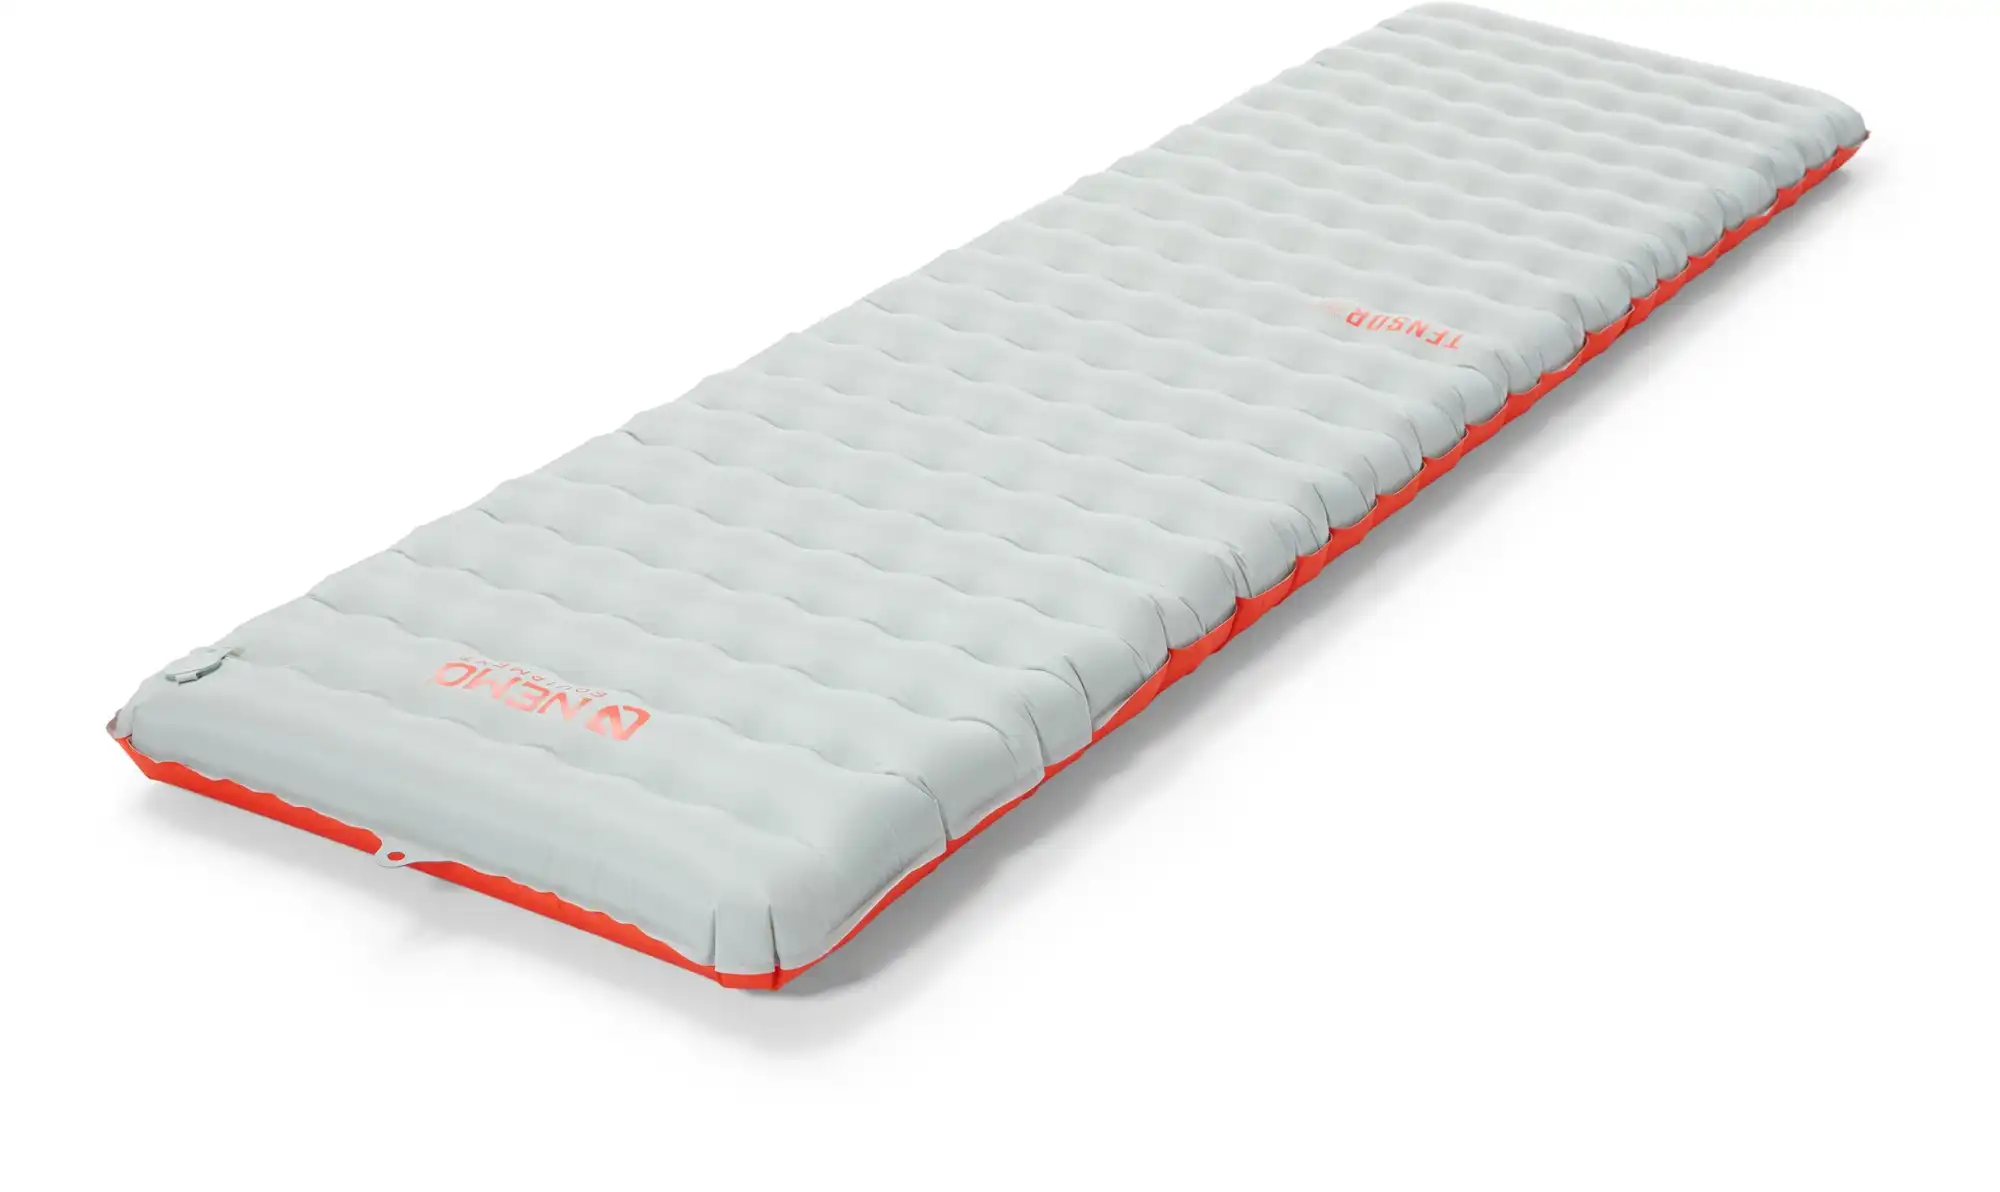 NEMO Tensor All-Season Ultralight Insulated Sleeping Pad